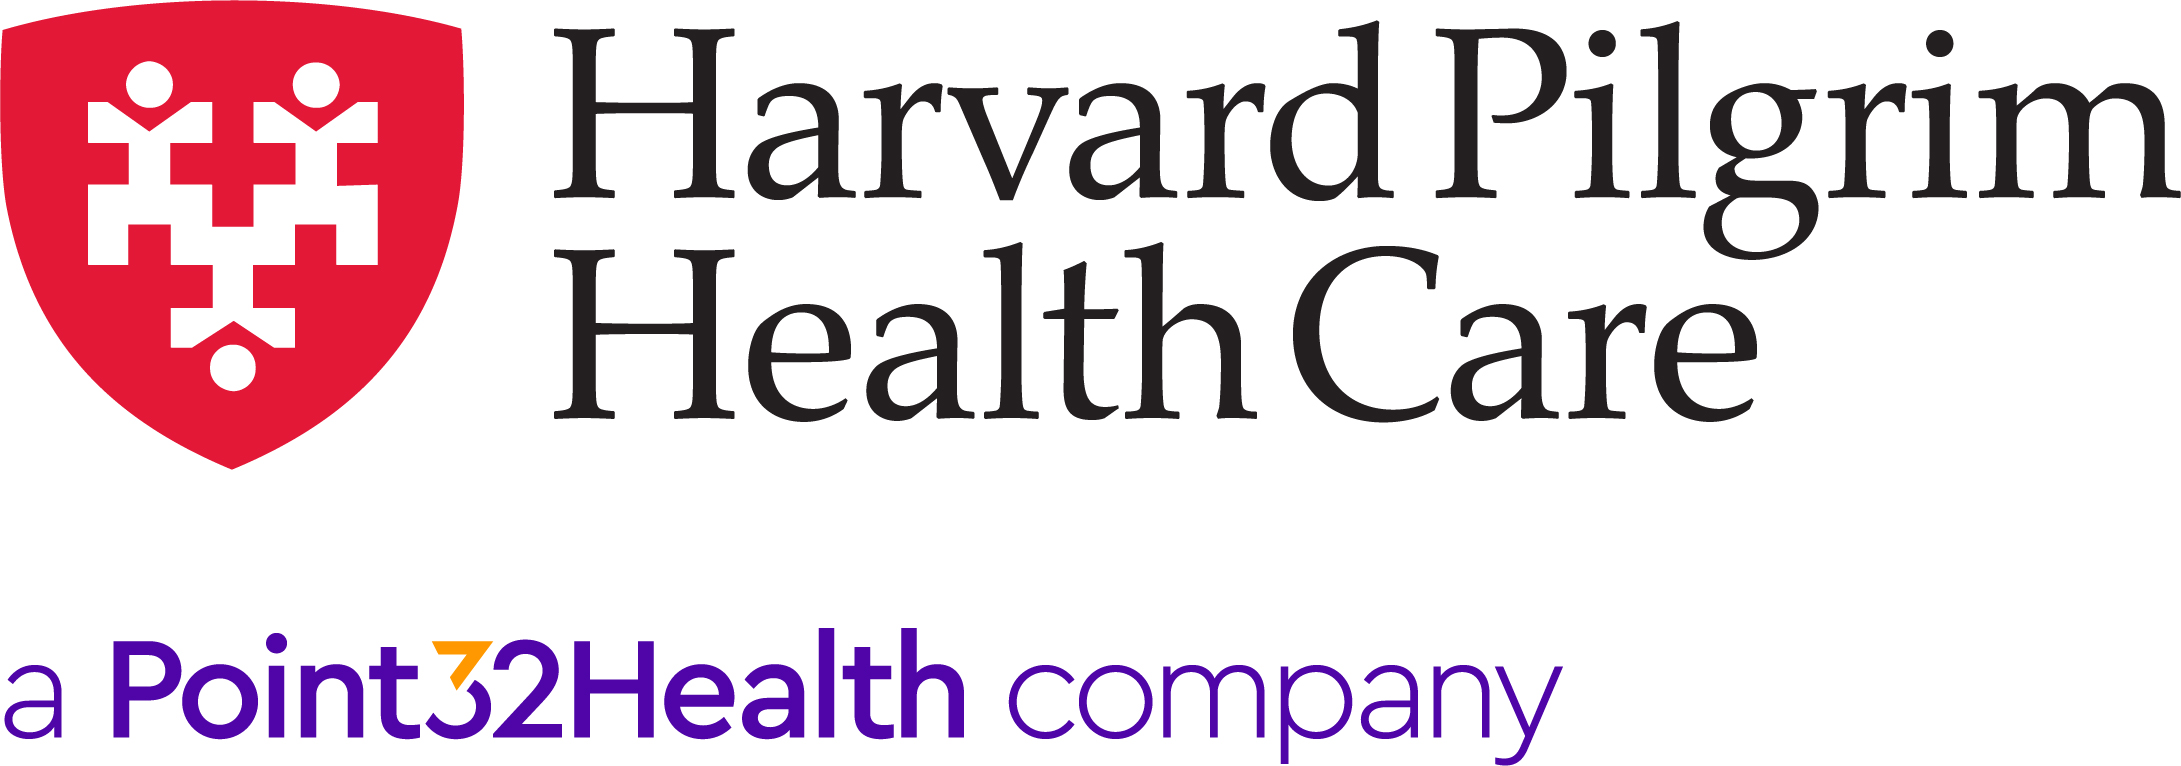 Harvard Pilgram Healthcare a Point32Health company Logo